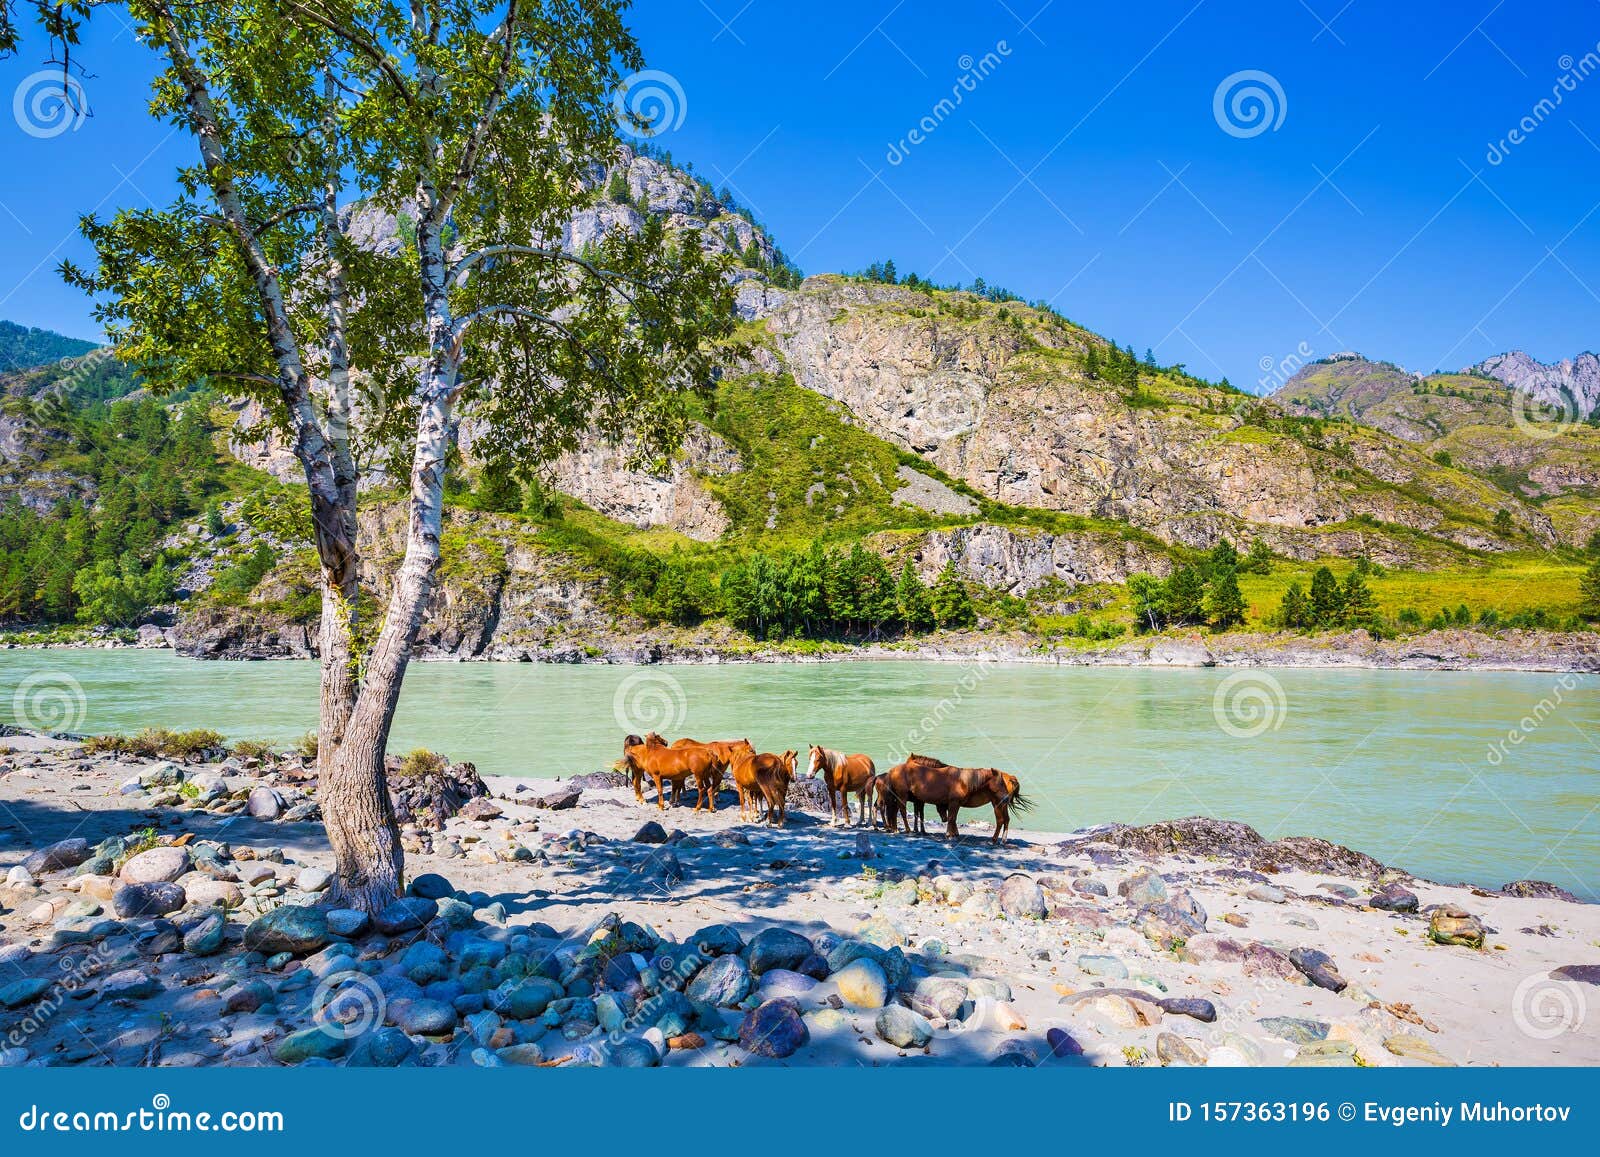 Horses By The River Gorny Altai Siberia Russia Stock Photo Image